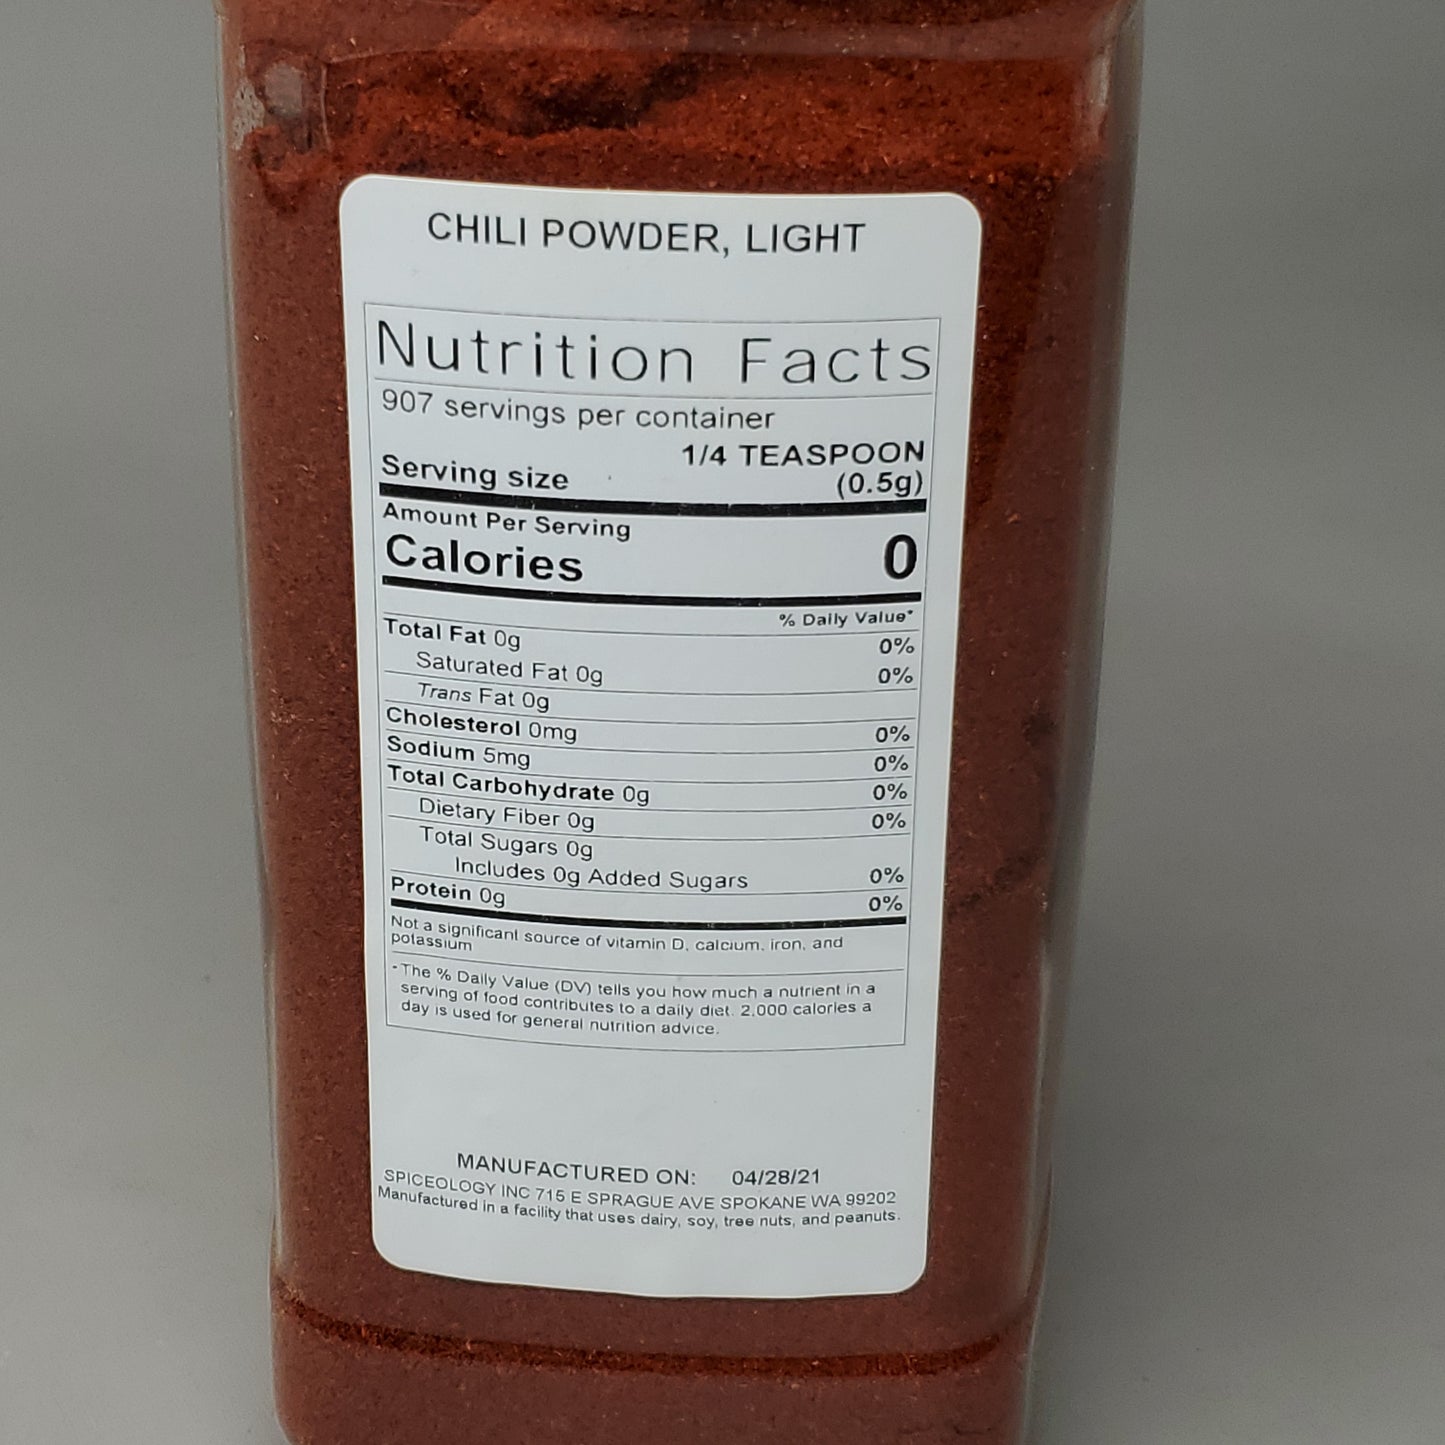 SPICEOLOGY Light Chili Powder Blend Large 16 oz  04/24 (New)